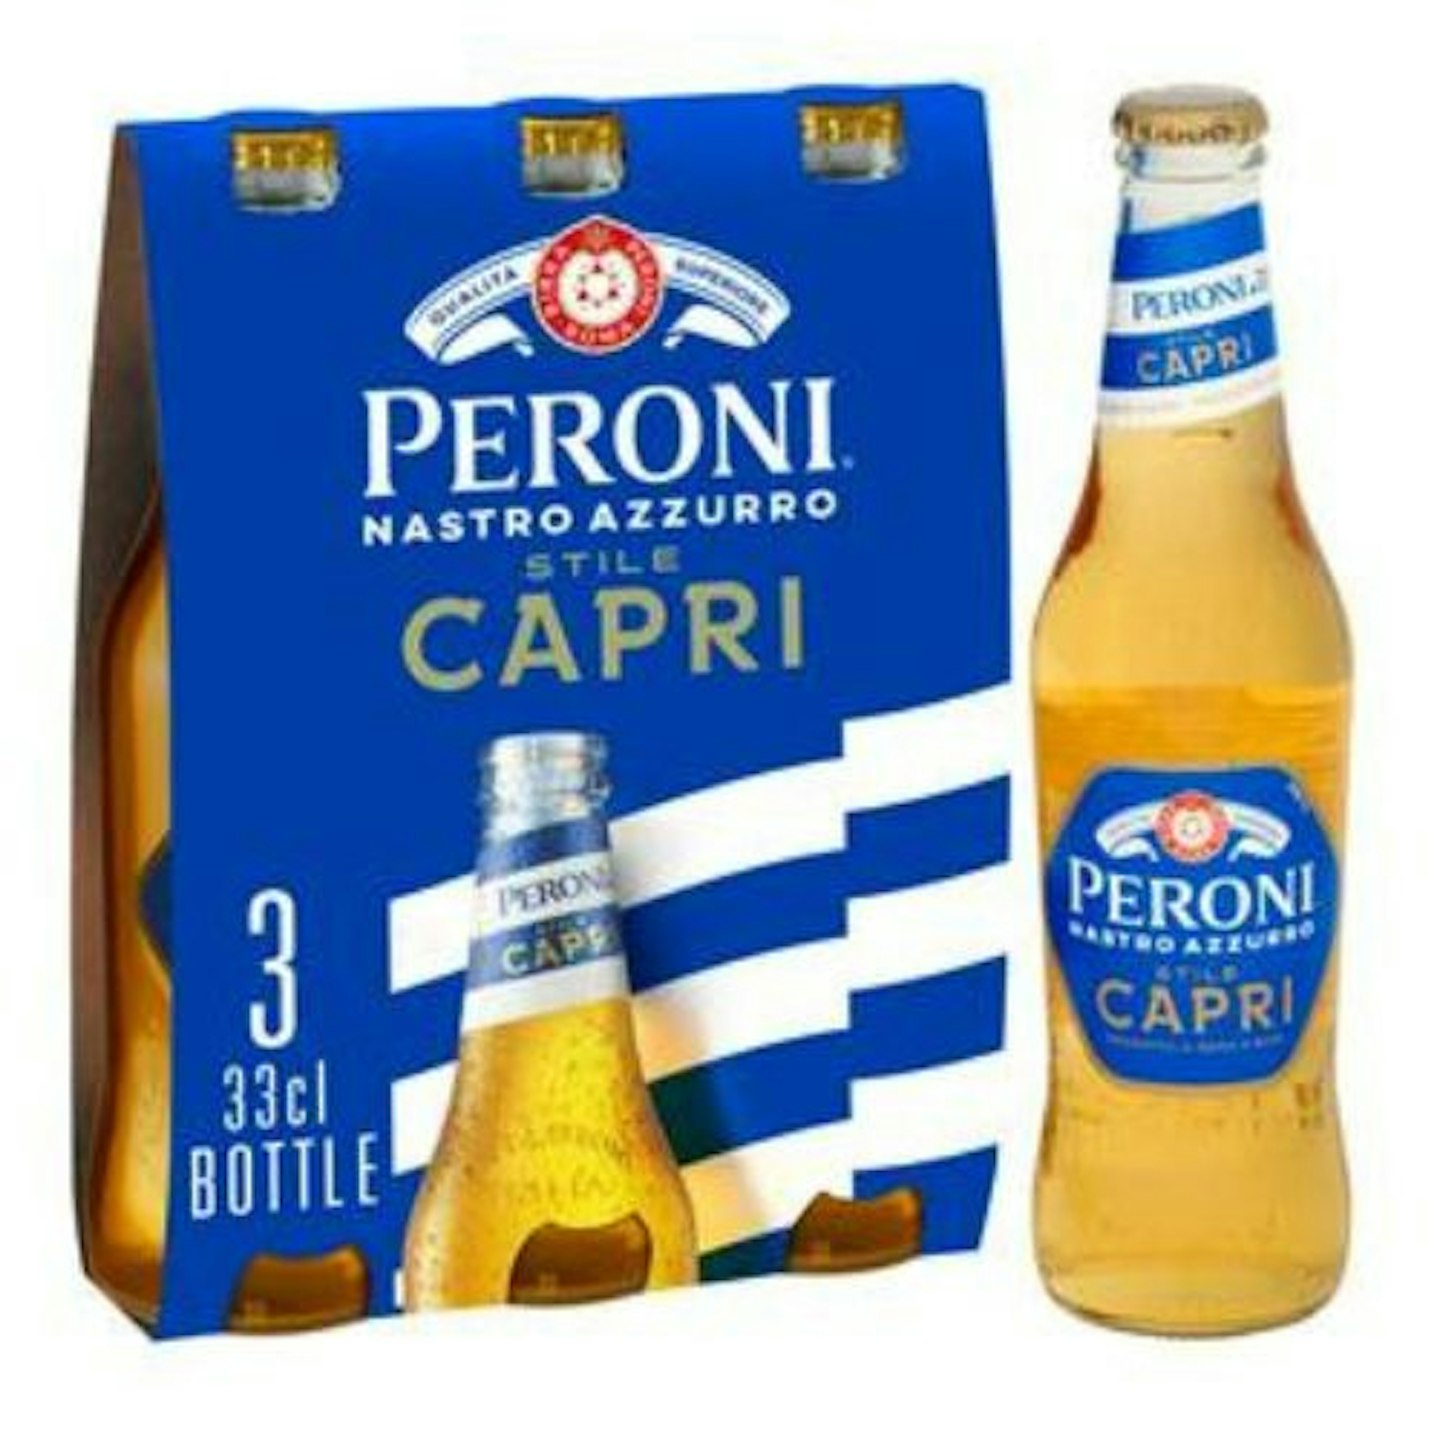 Peroni Nastro Azzurro Stile Capri Beer Lager Bottles